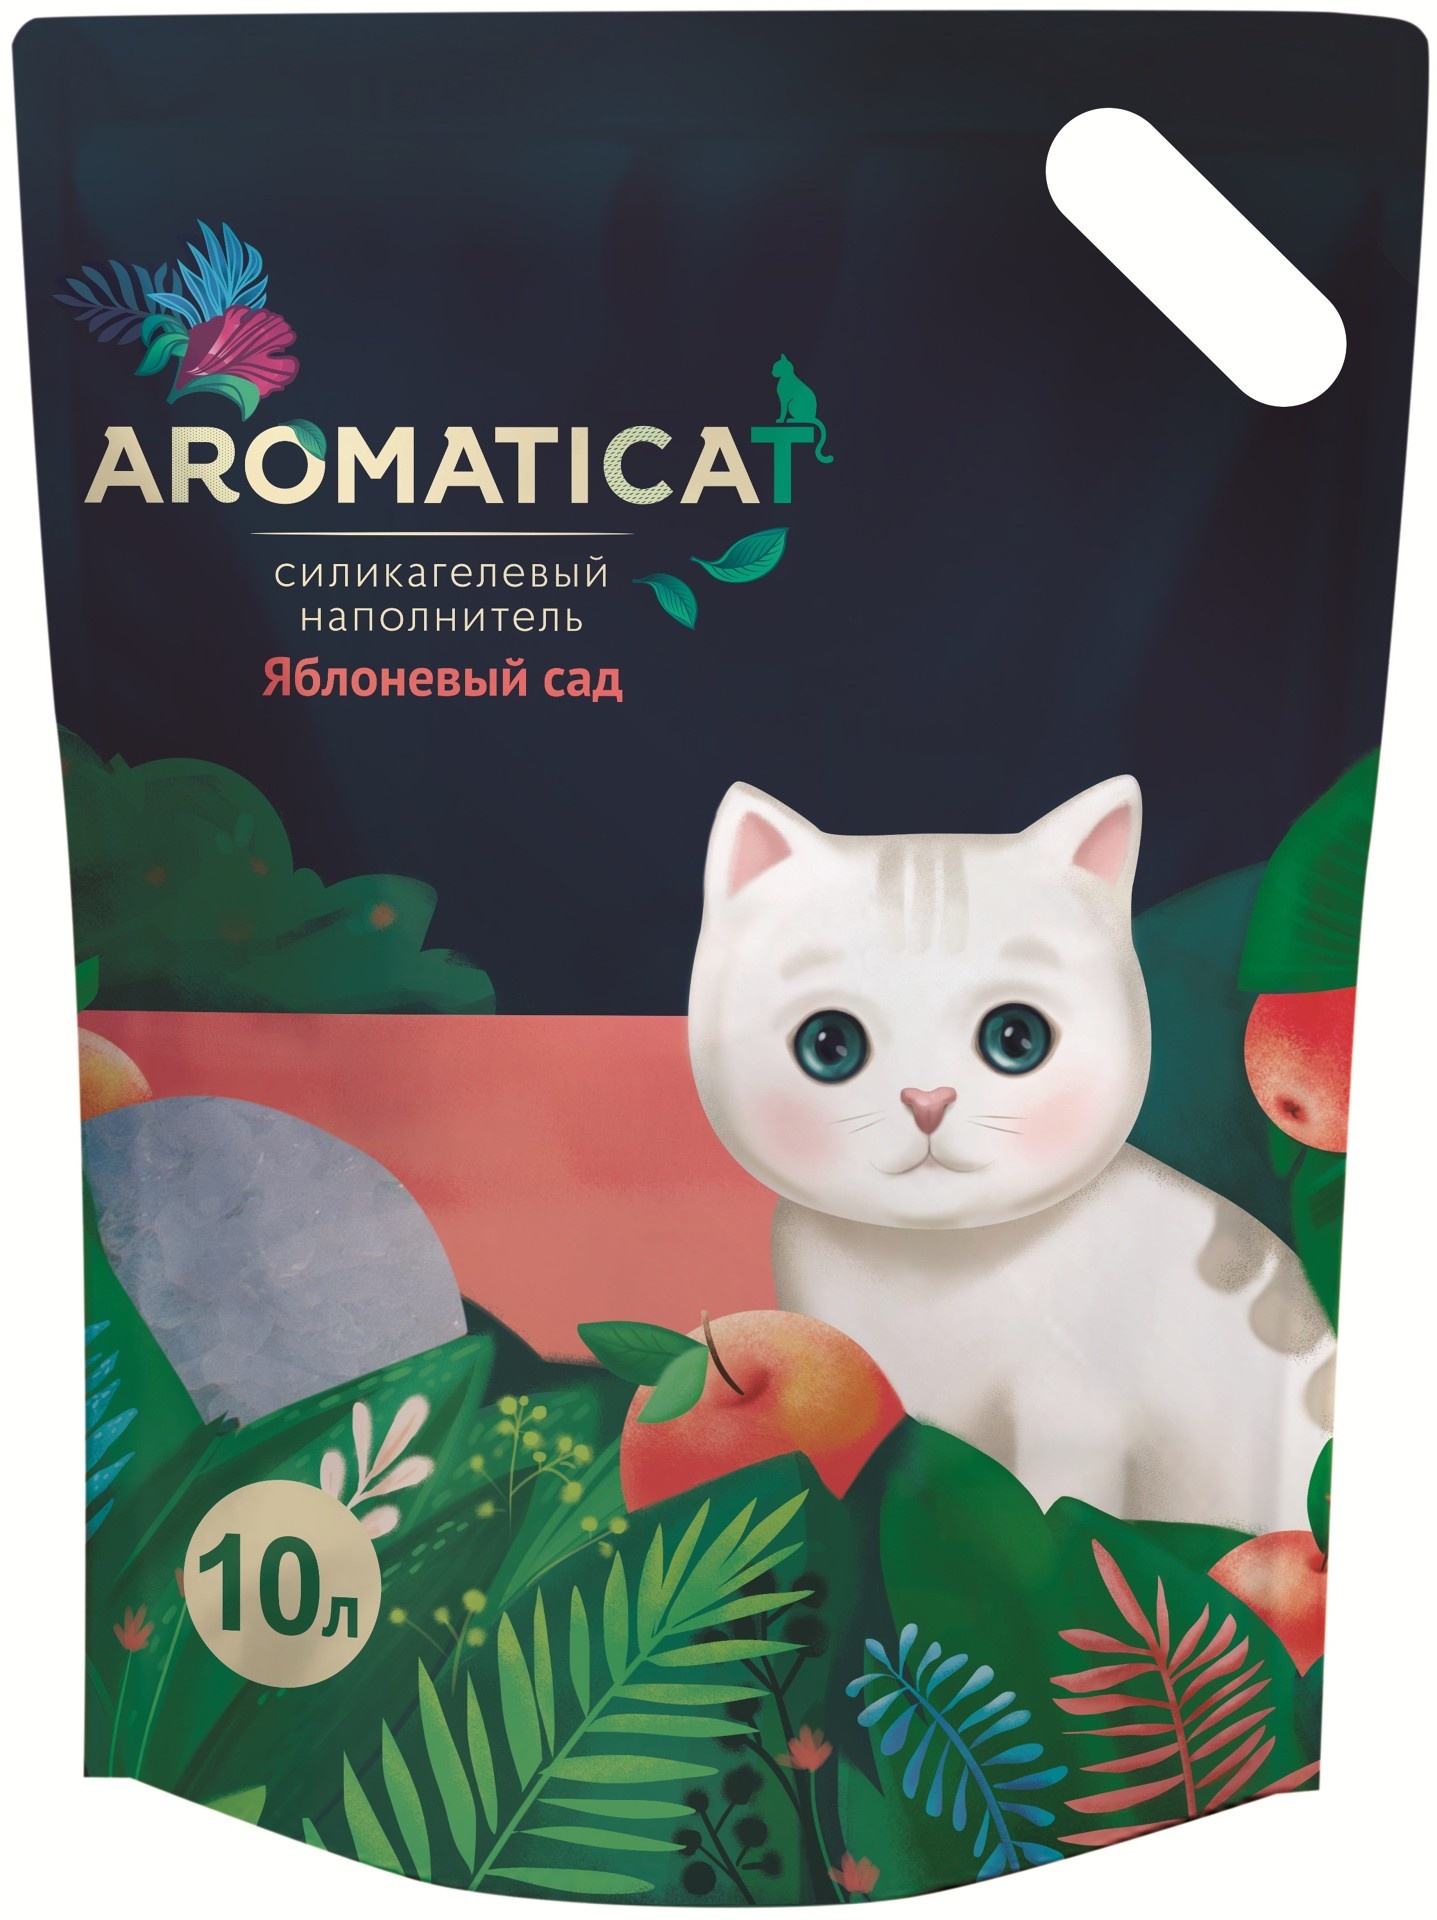 AromatiCat